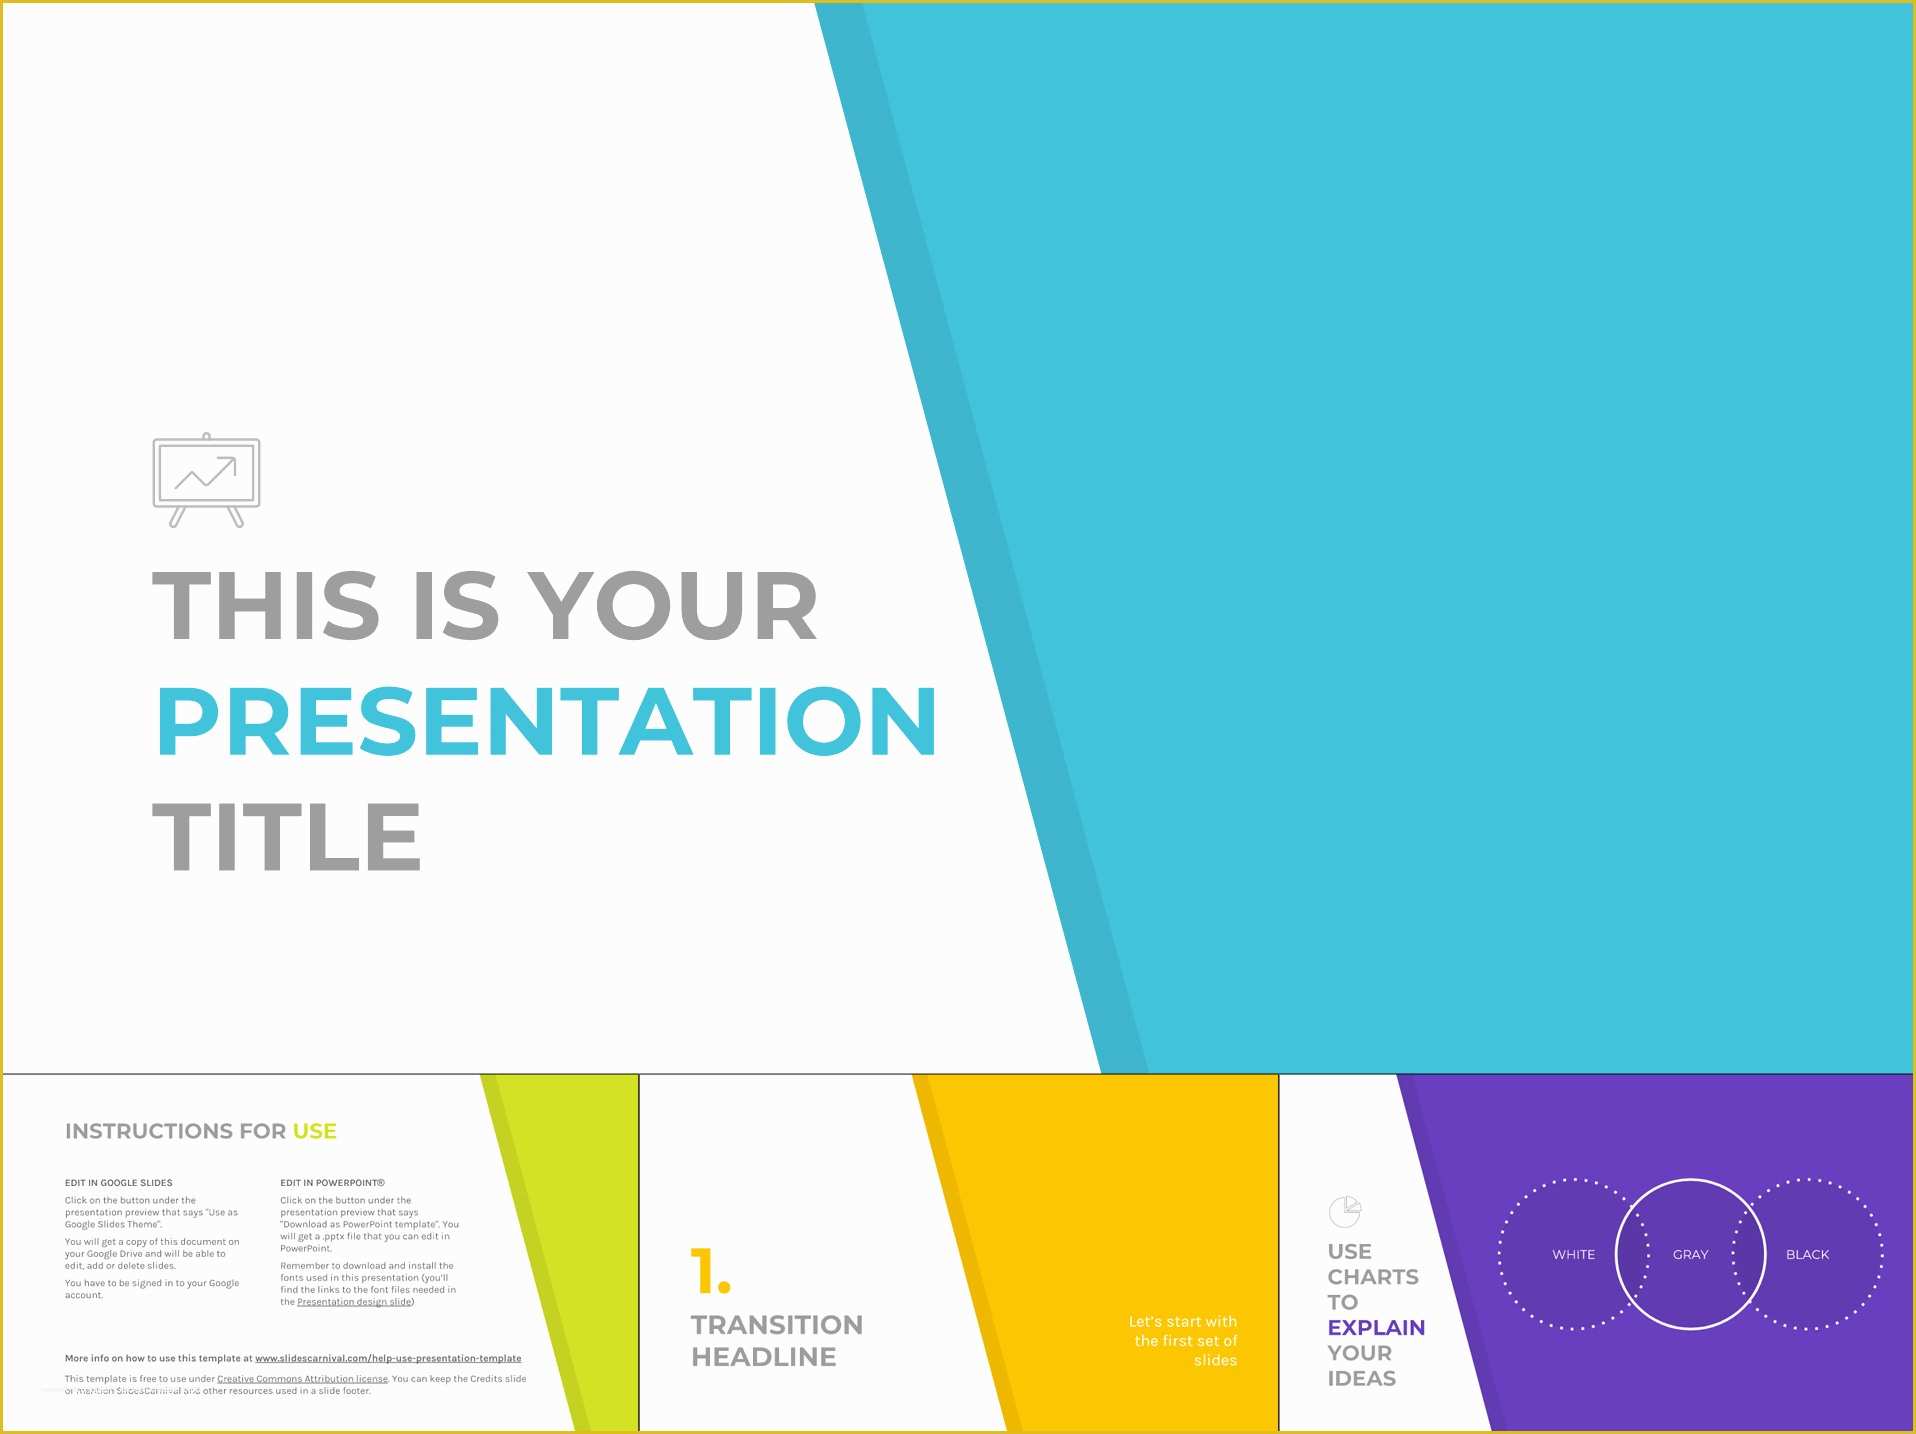 Free Google Slides Templates Of 30 Free Google Slides Templates for Your Next Presentation